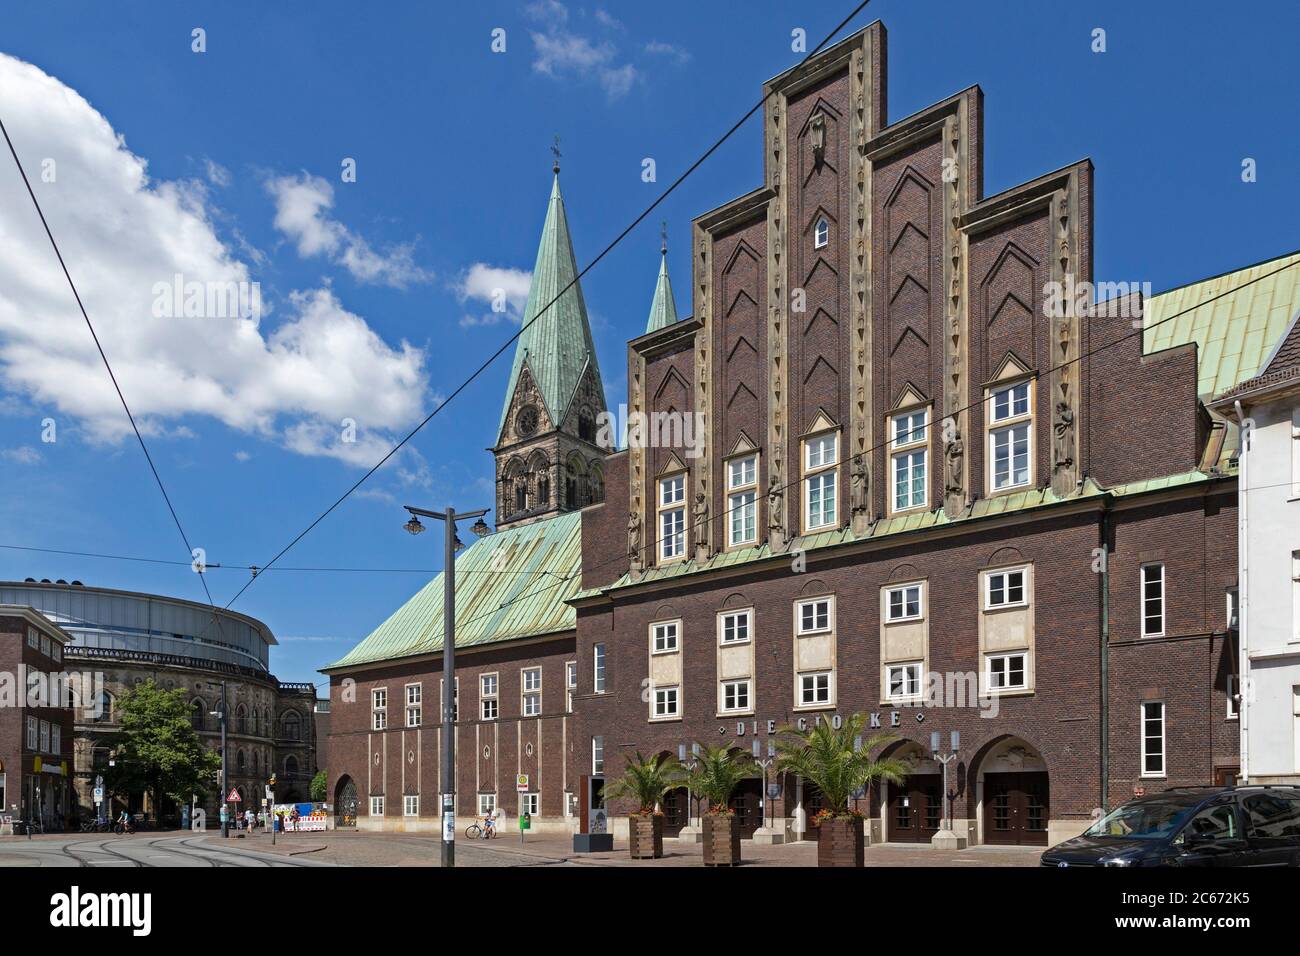 Die Glocke Concert Hall, Bremen, Germany Stock Photo